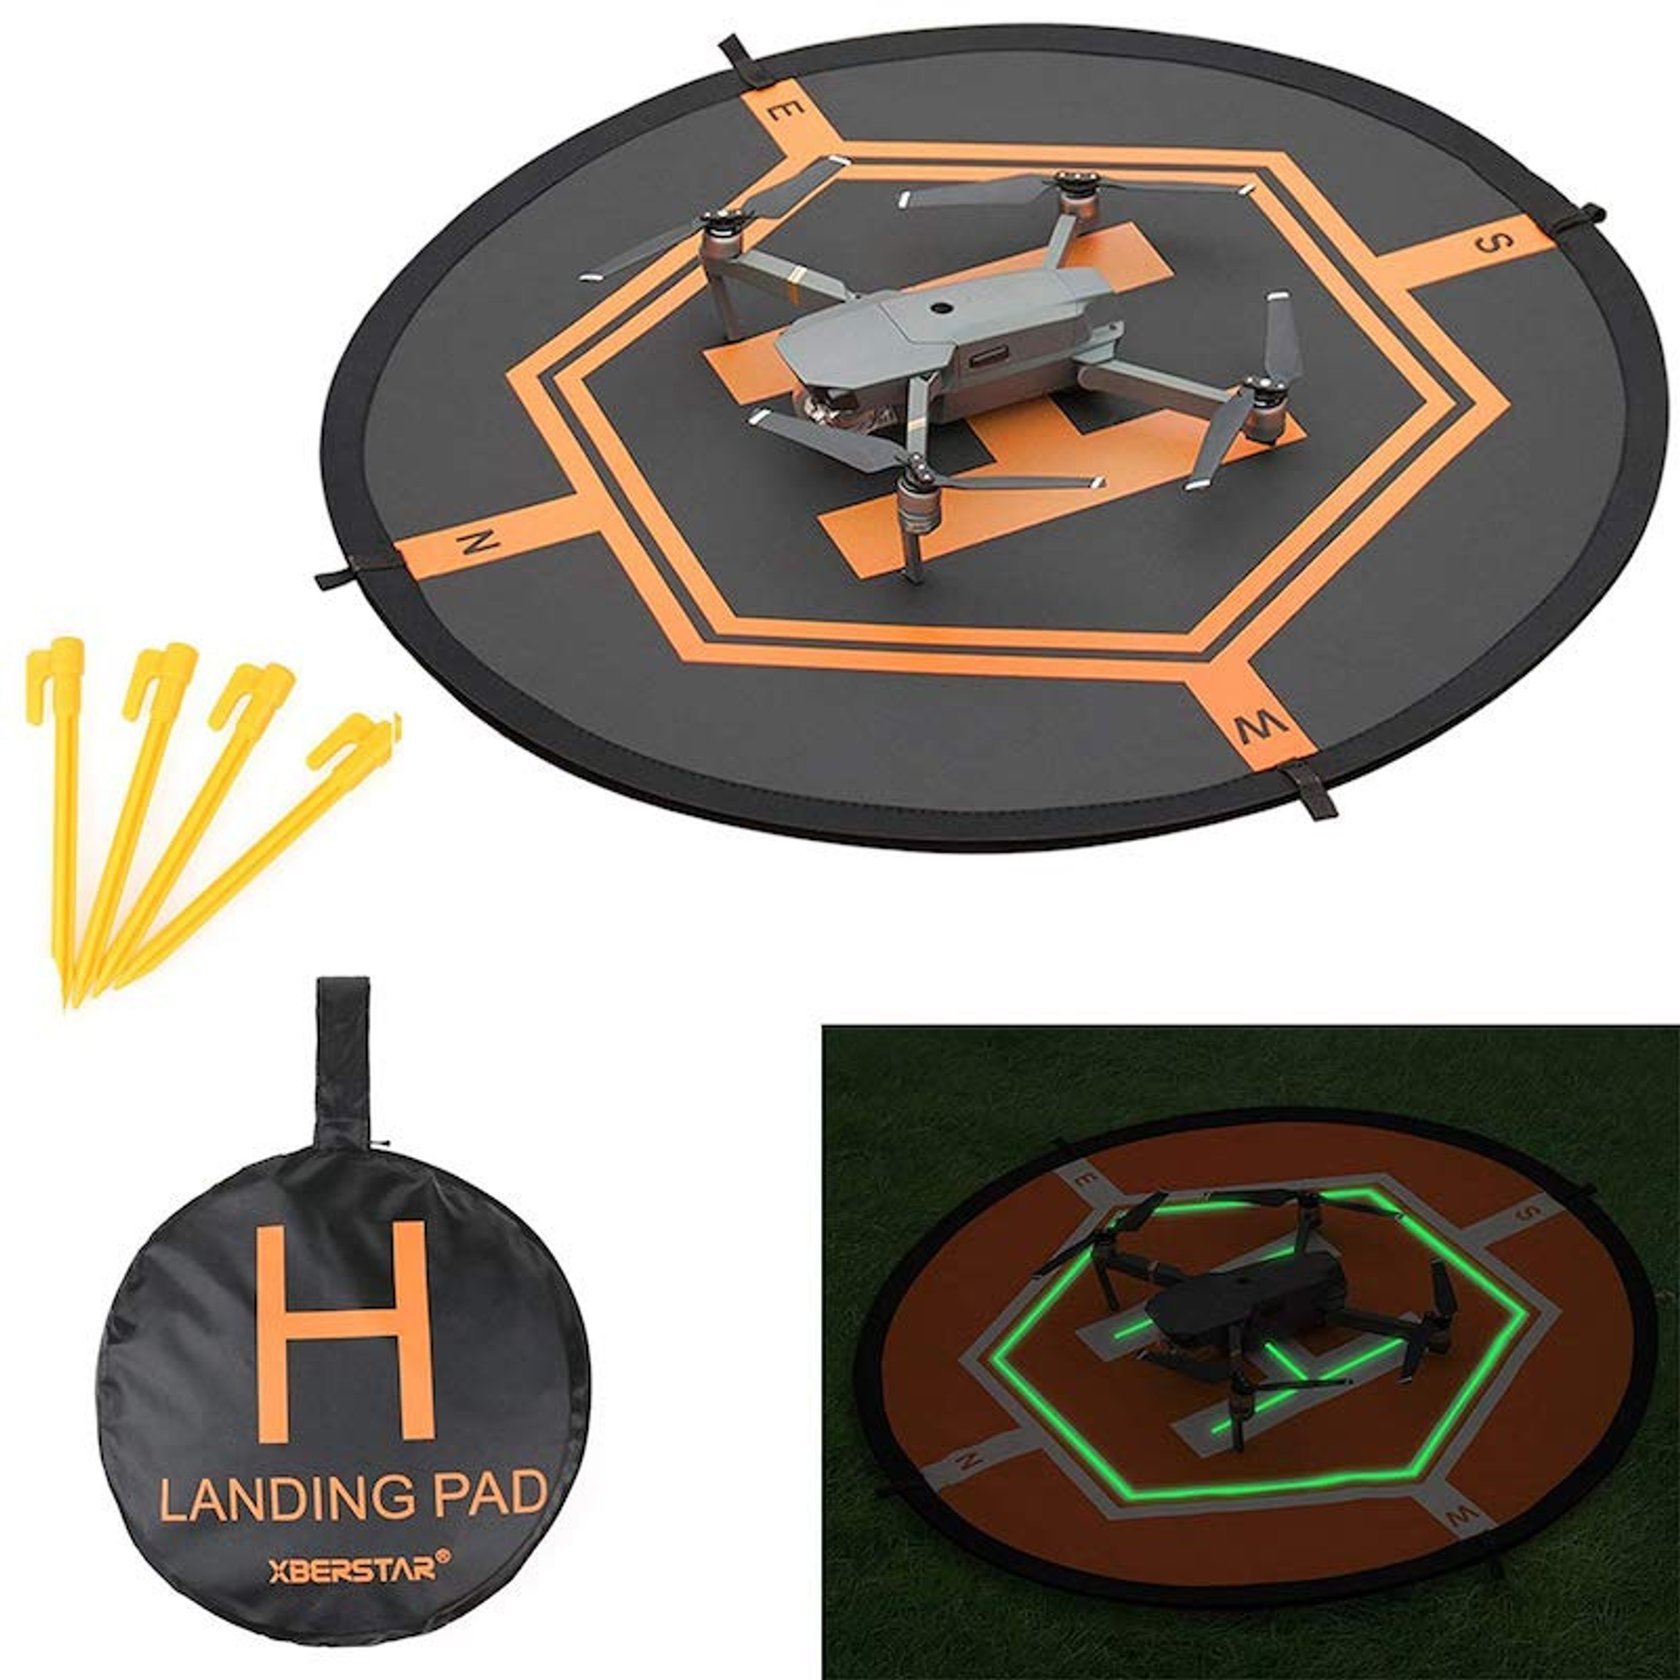 NewBeeDrone Landing Pad XL